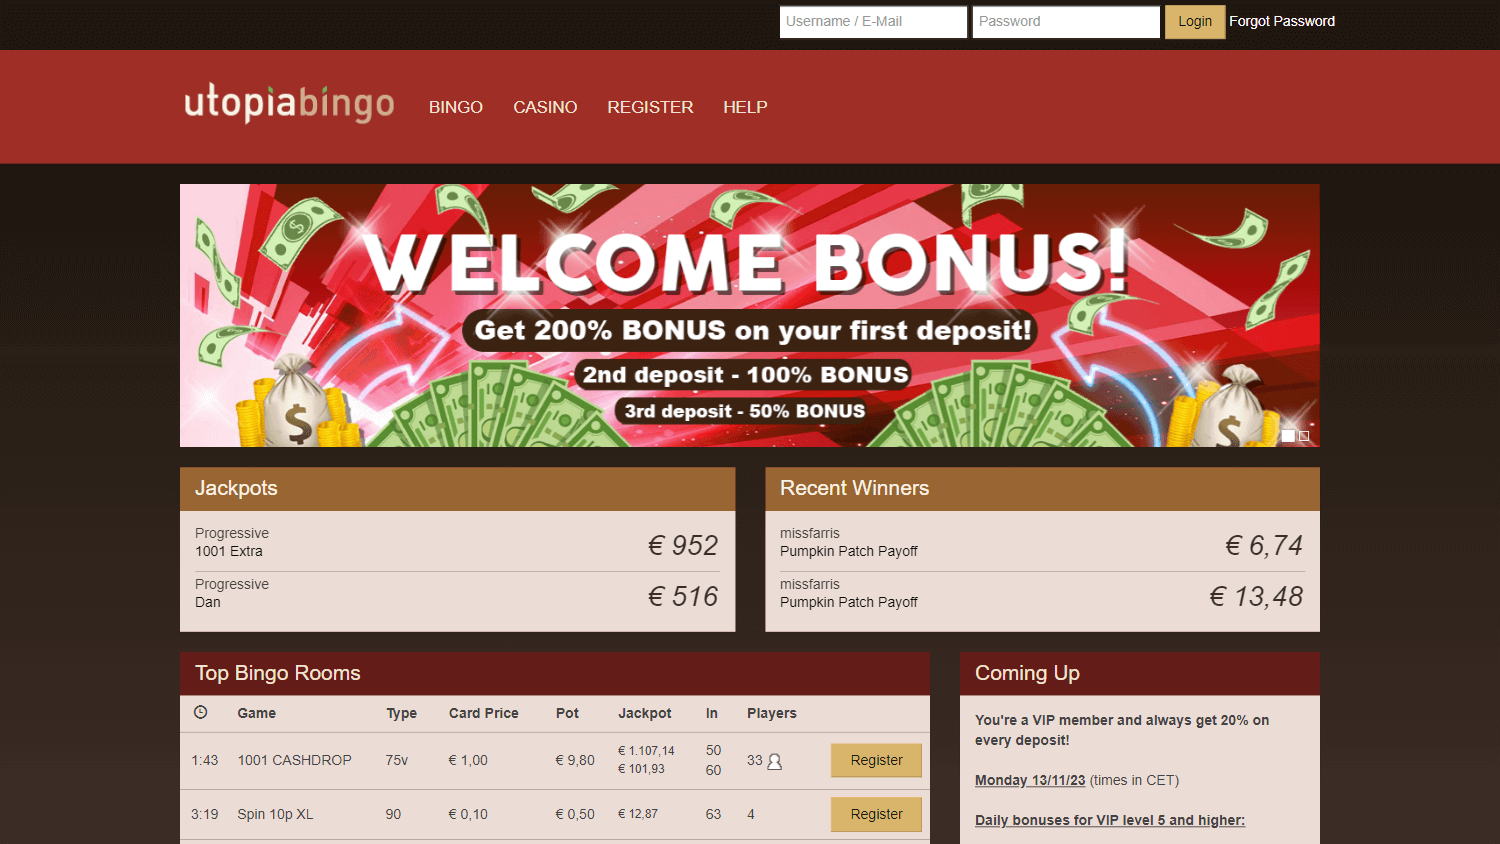 utopia_bingo_casino_homepage_desktop